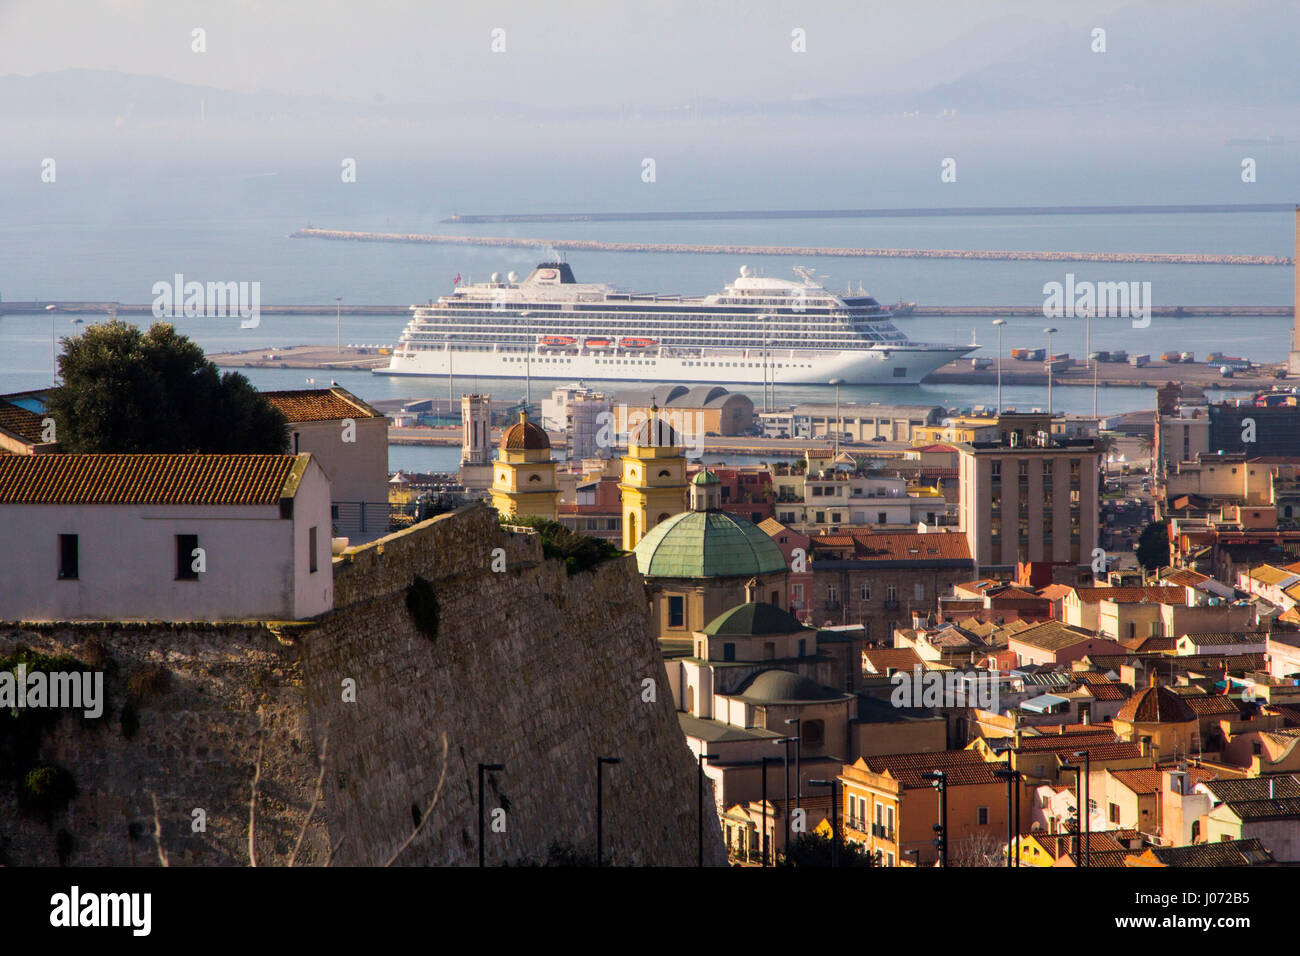 Cruise ship Viking Sea at Cagliari, Sardinia. Stock Photo